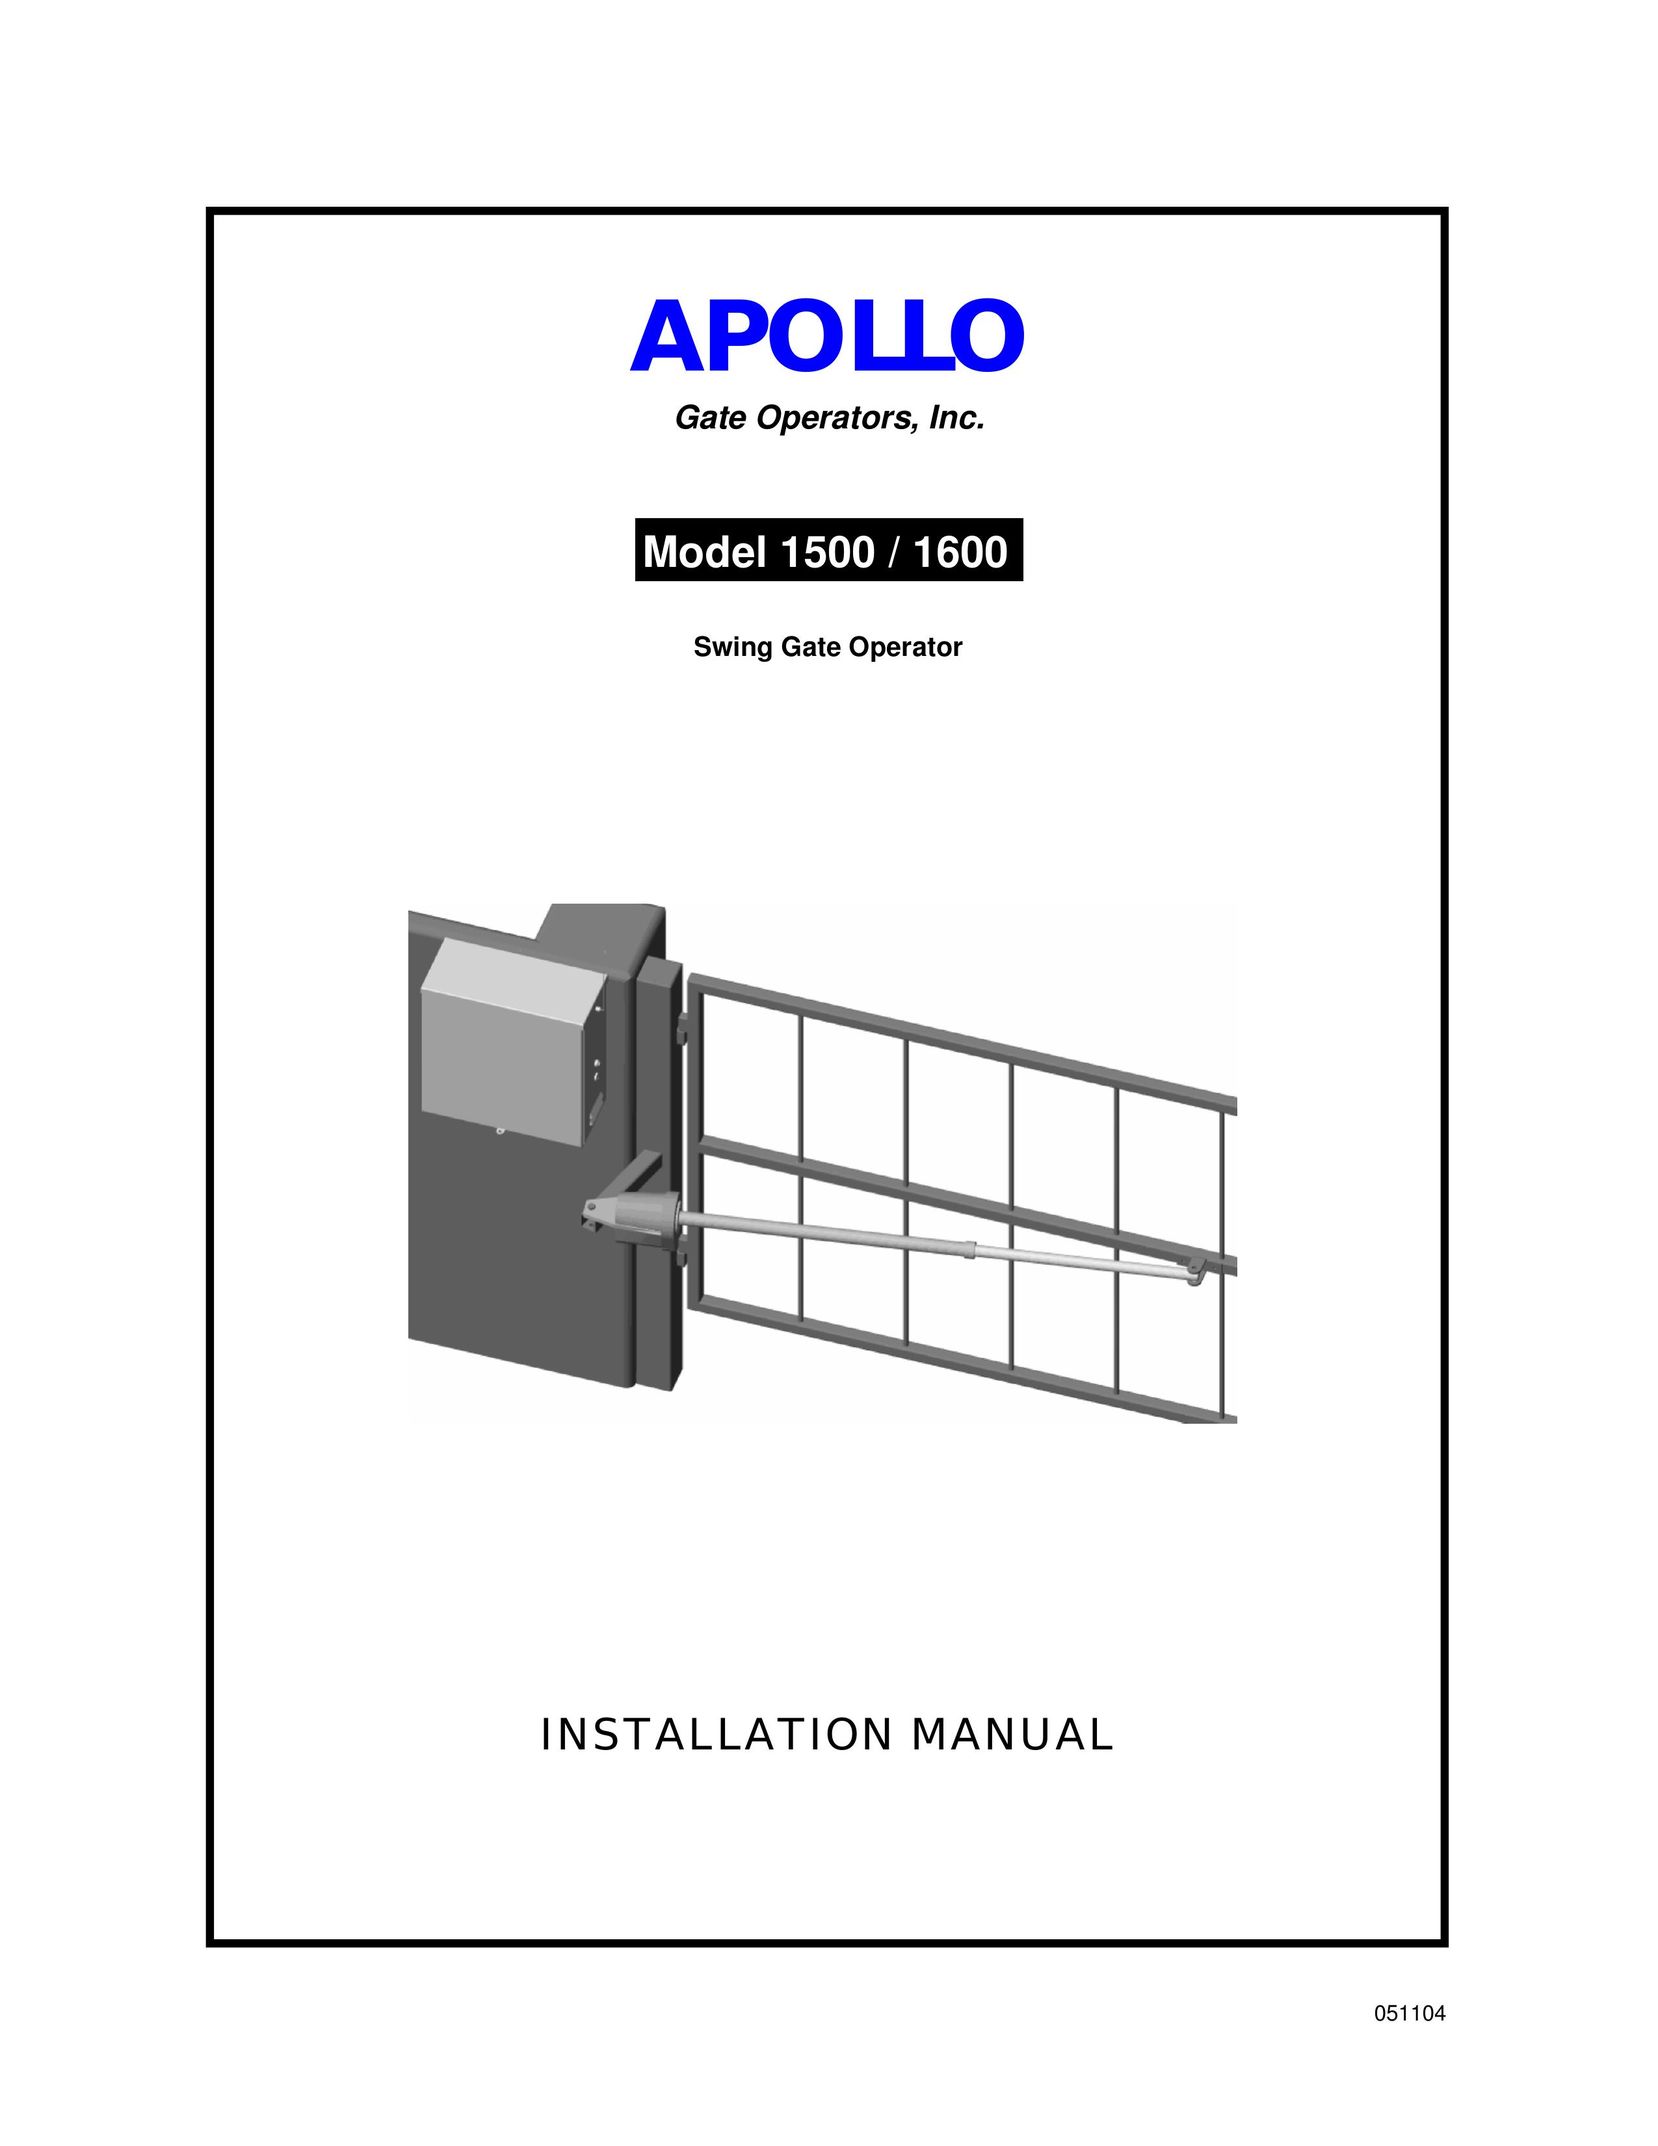 Apollo 1600 Safety Gate User Manual